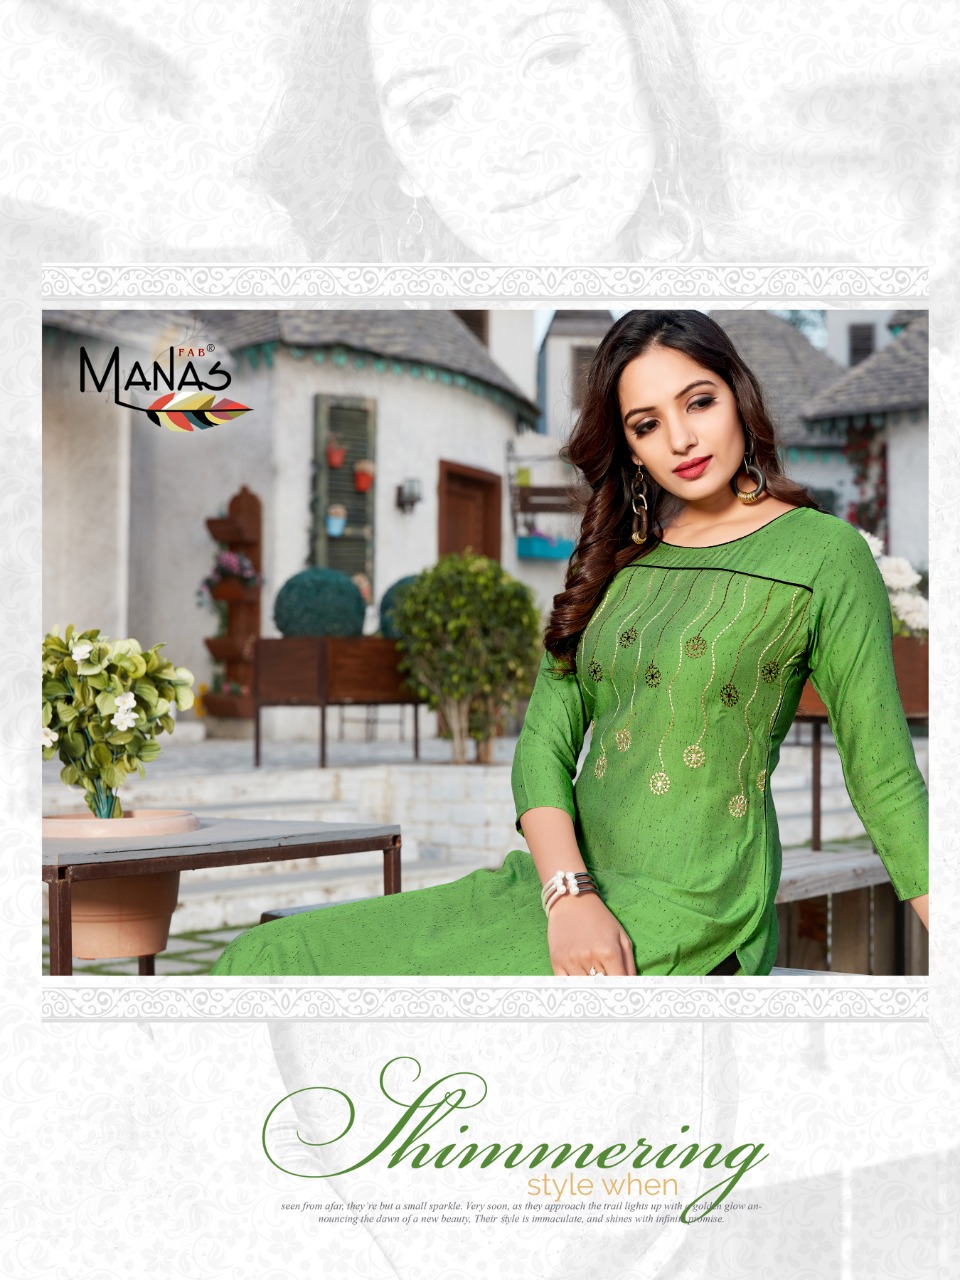 Manas Presents Anishka Vol-4 Rayon Beautiful Designer Kurtis Catalog Wholesaler